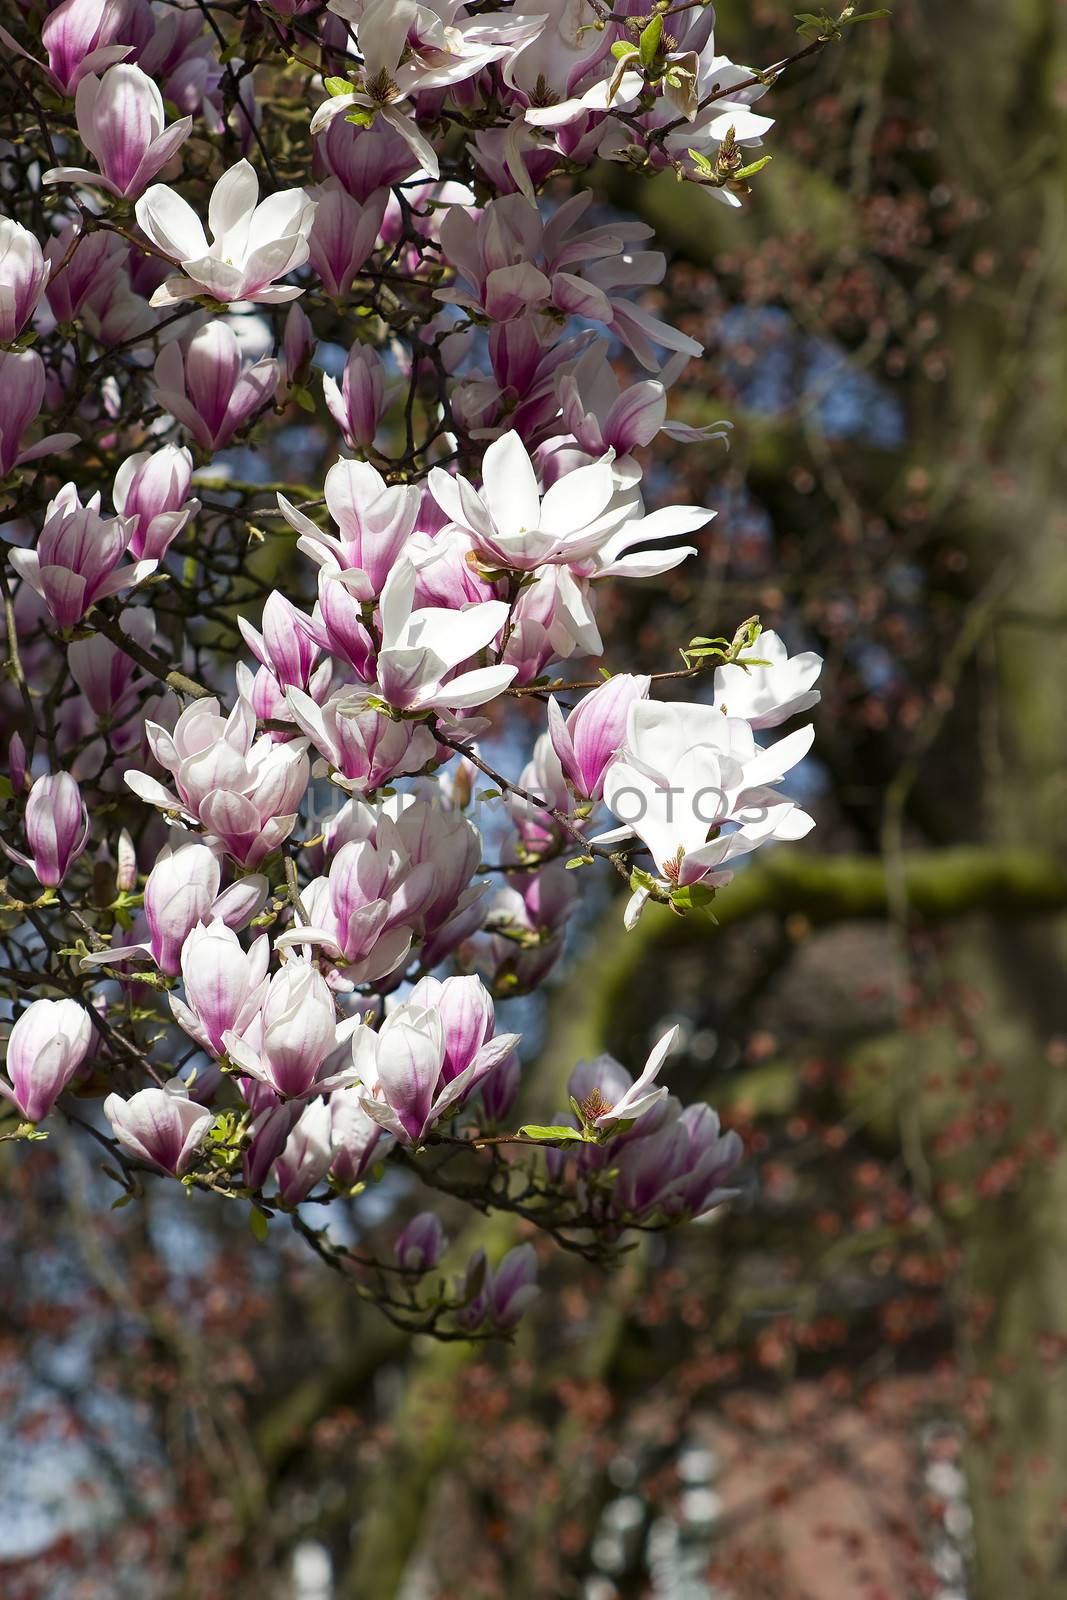 blooming magnolia tree by miradrozdowski